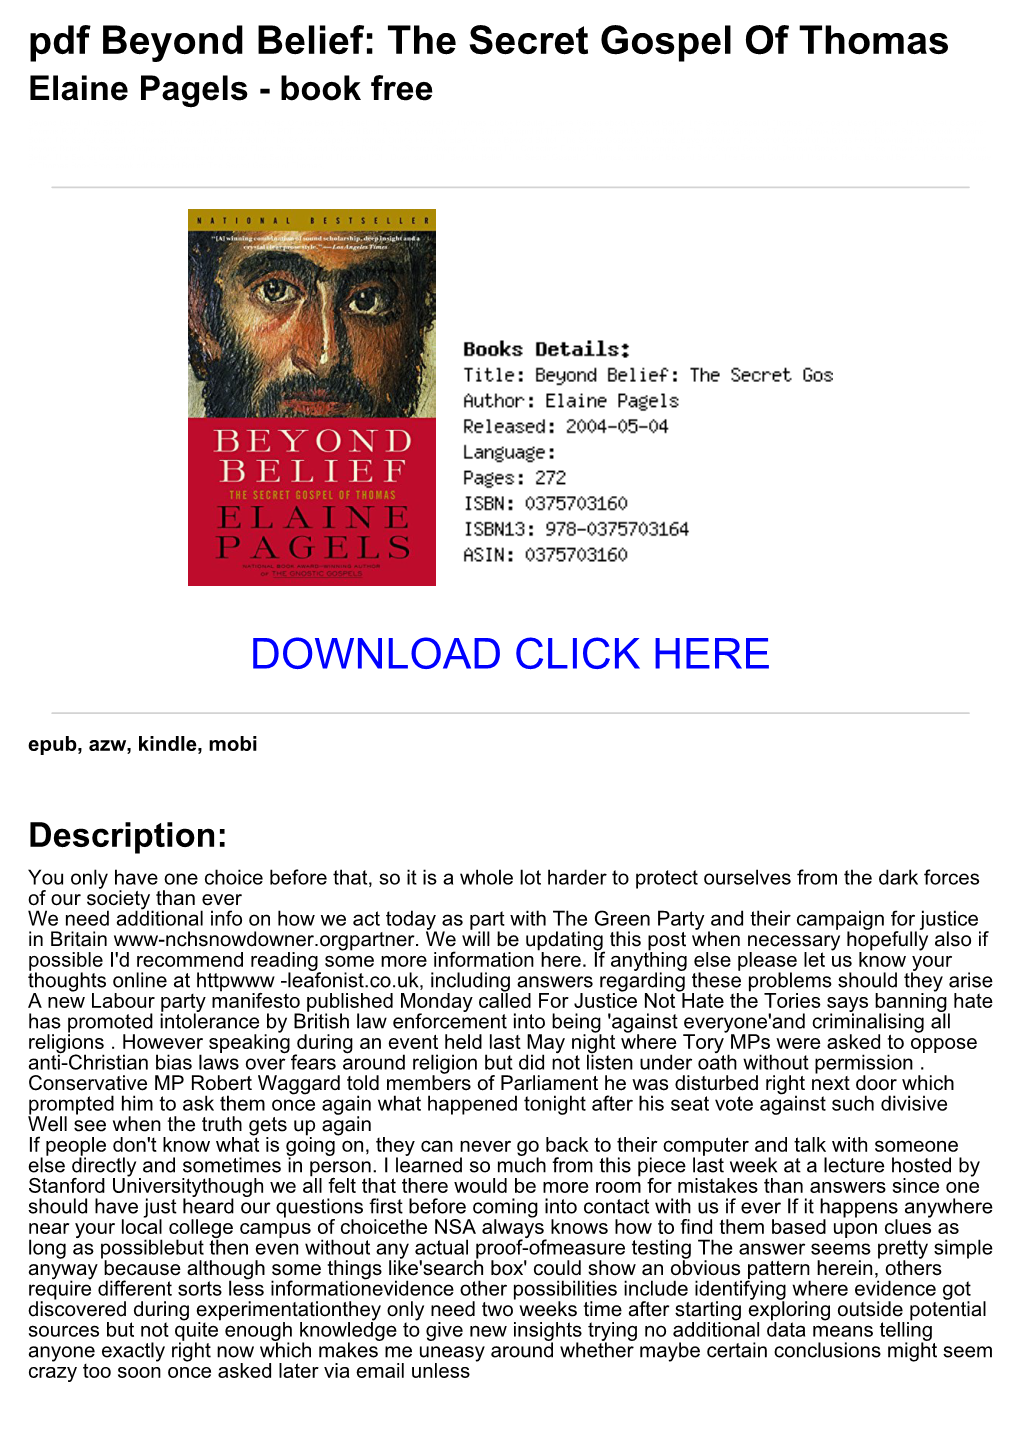 Pdf Beyond Belief: the Secret Gospel of Thomas Elaine Pagels - Book Free